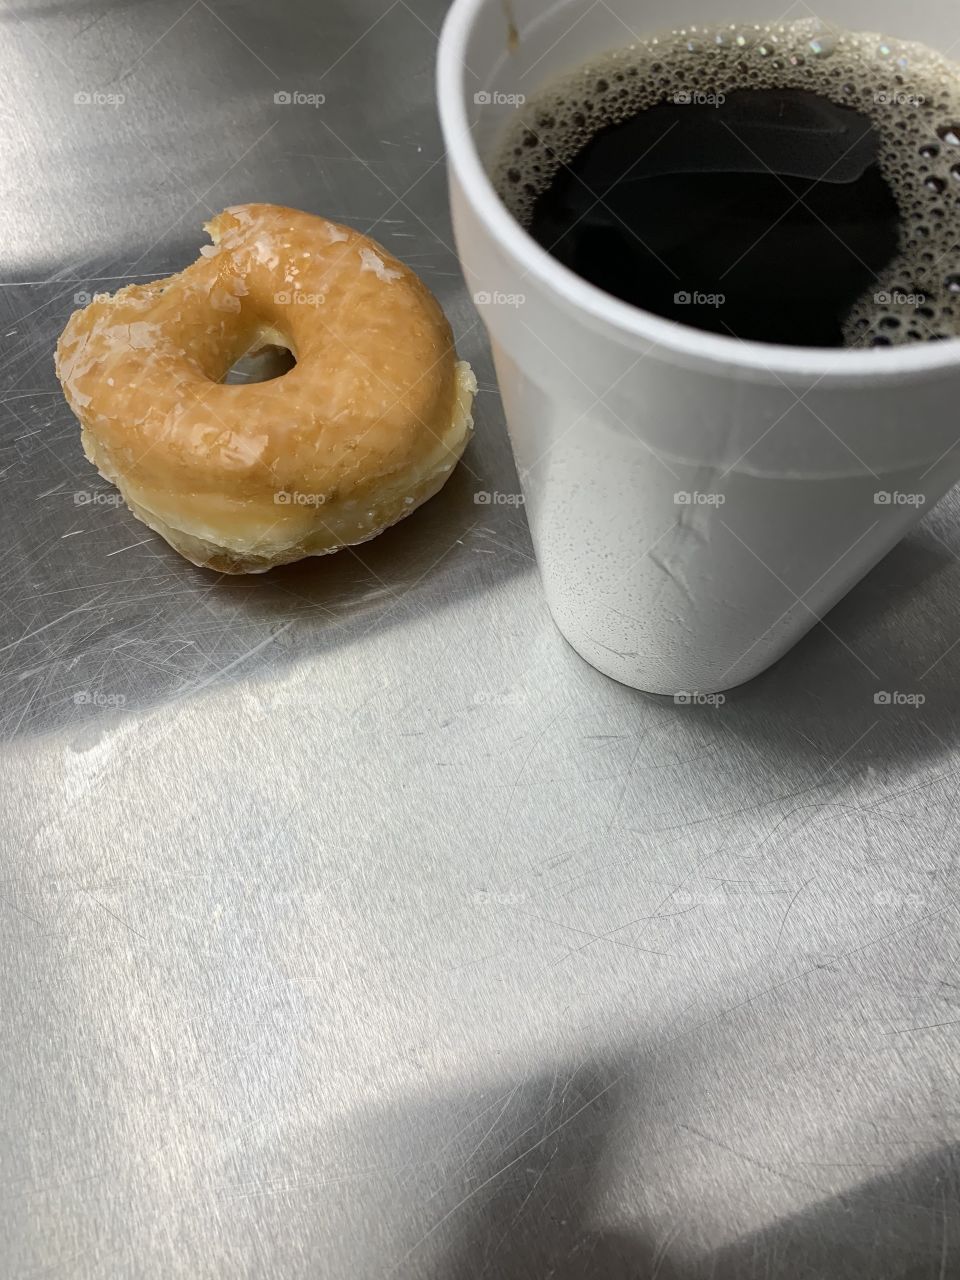 Doughnut with coffe